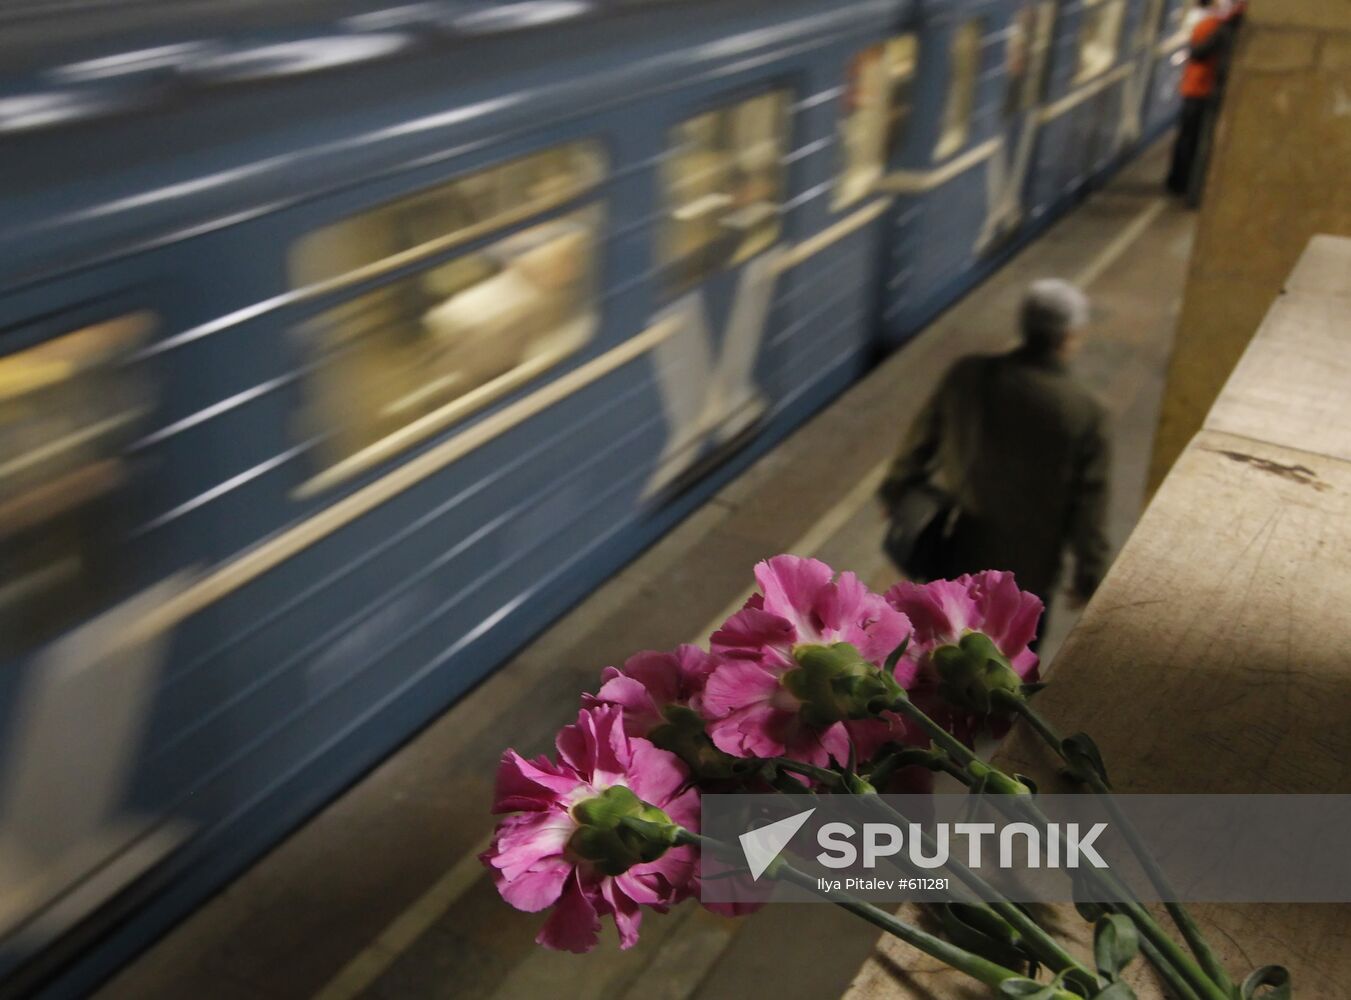 Train service resumed through Lubyanka and Park Kultury